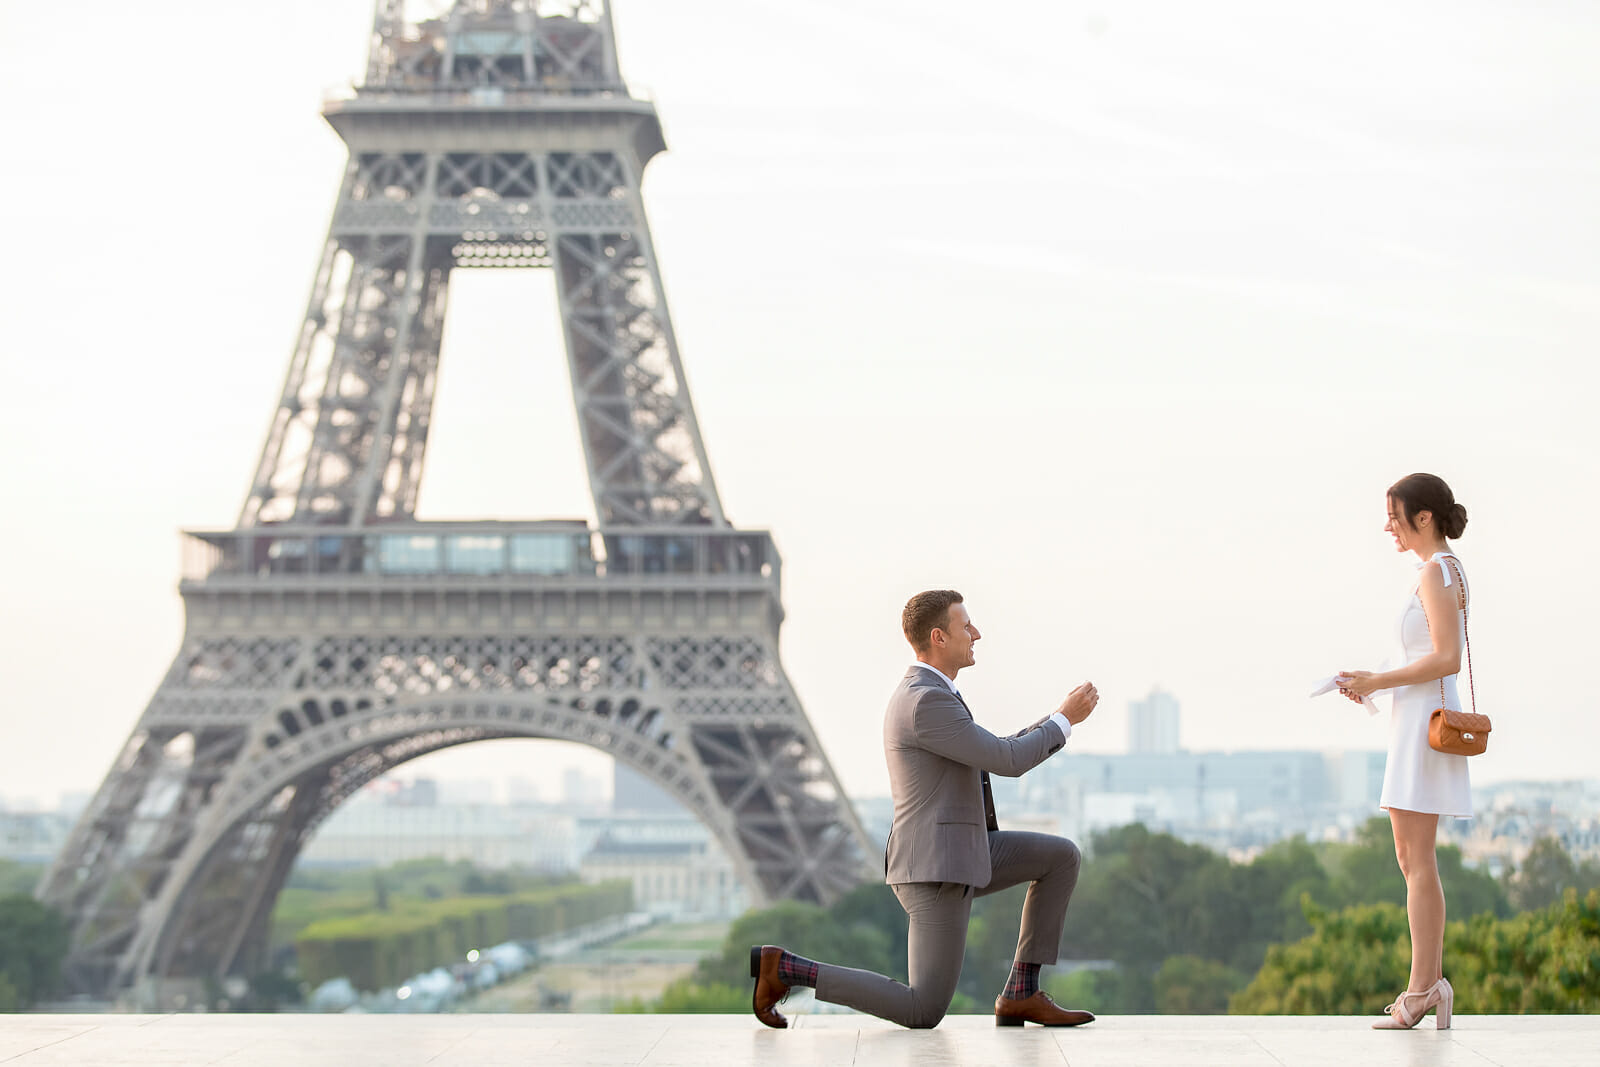 Beautiful Eiffel Tower marriage proposal at Trocadero